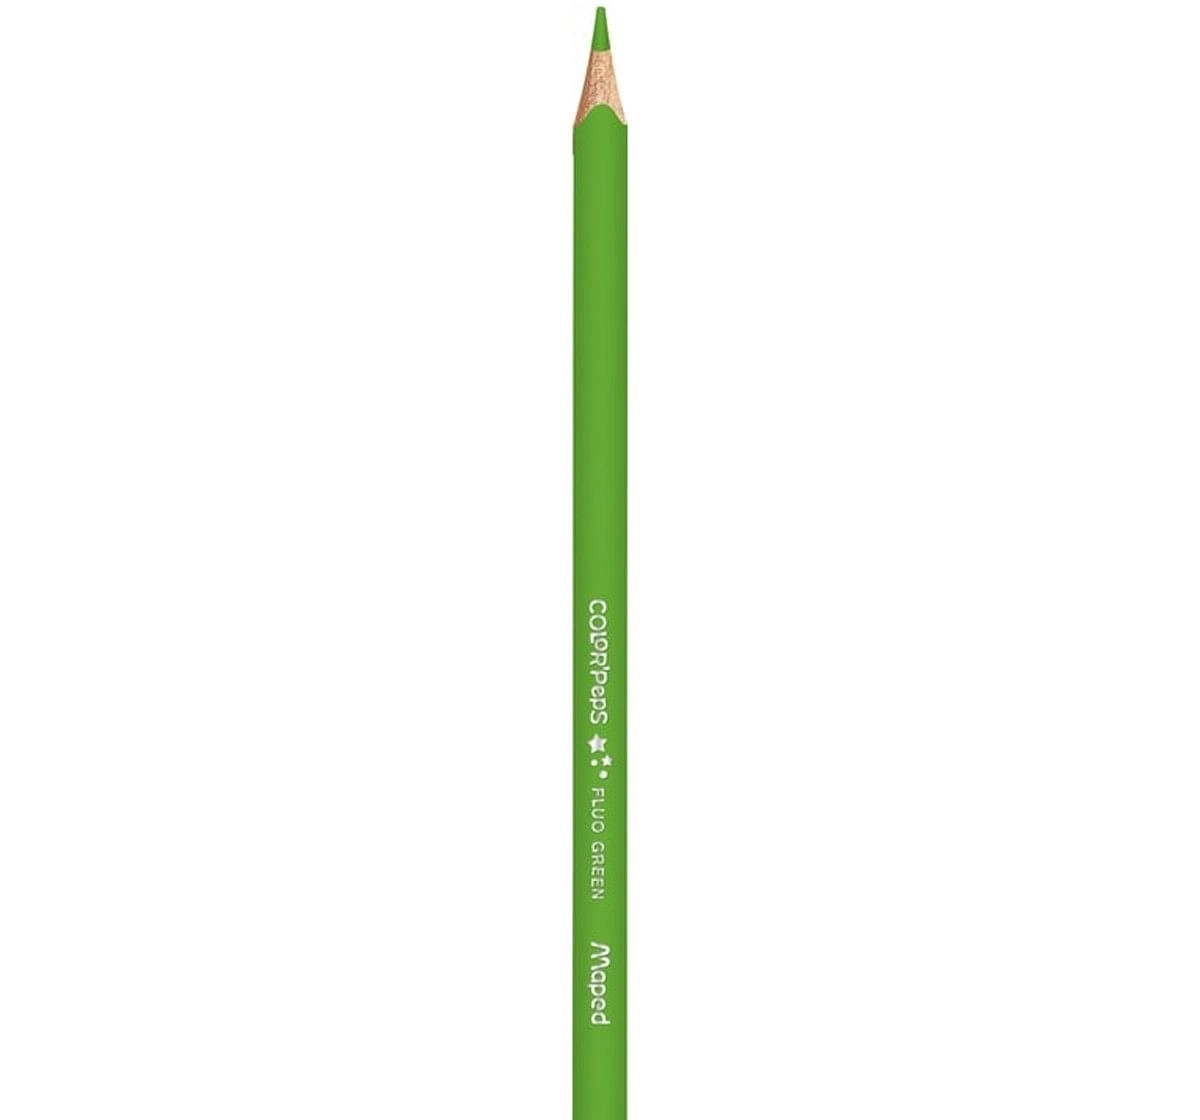 Maped Color'Peps Colour Pencils Fluo Cardboard Box 6 Shades Multicolour 7Y+